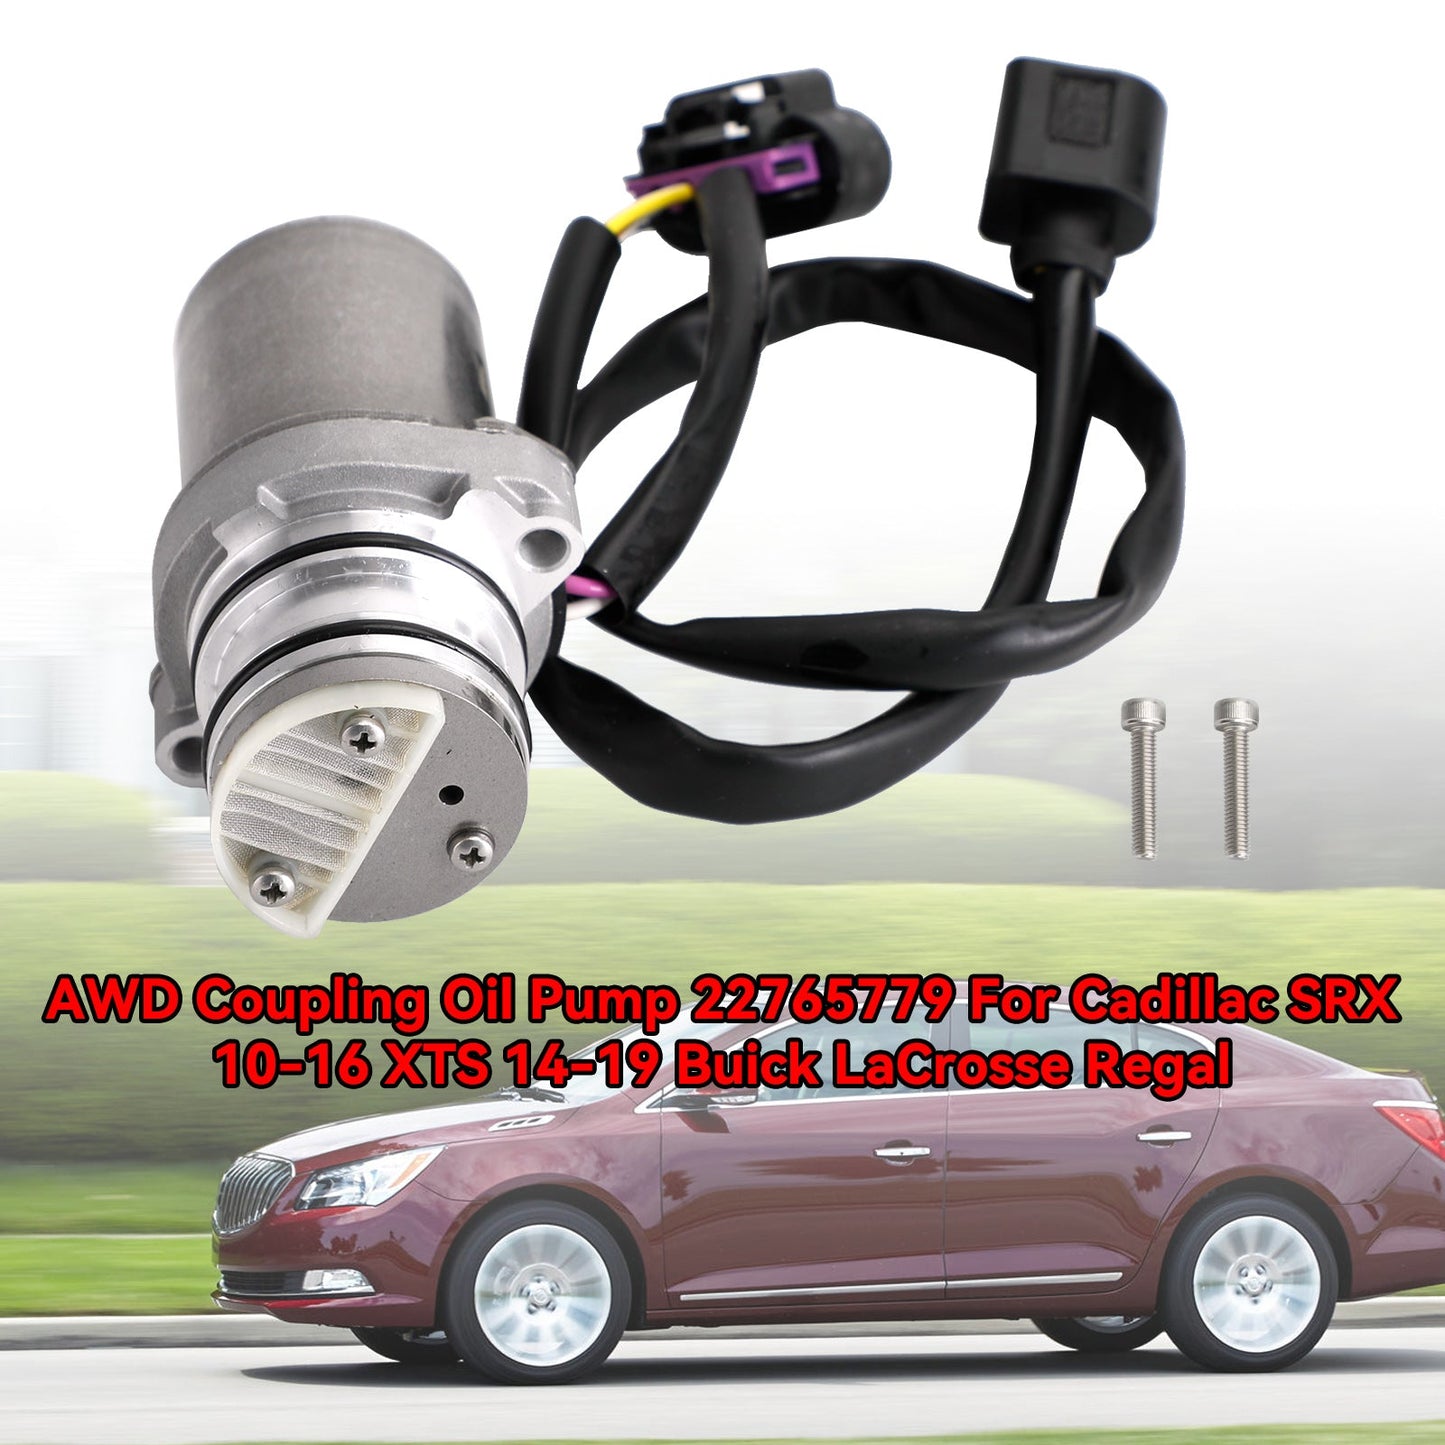 Buick Regal 2014-2017 L4 2.0L AWD Coupling Oil Pump 22765779 404029 13285796 699000